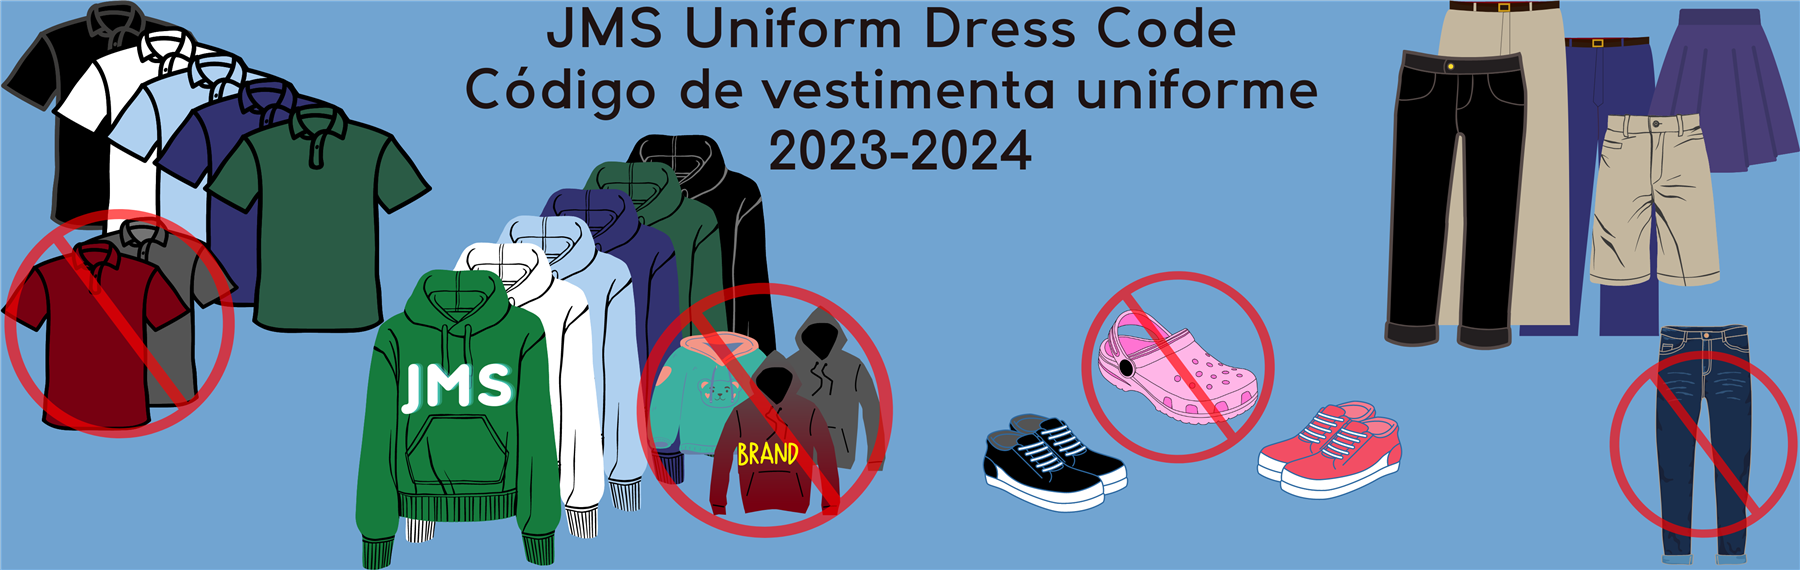 dress code 2023-2024